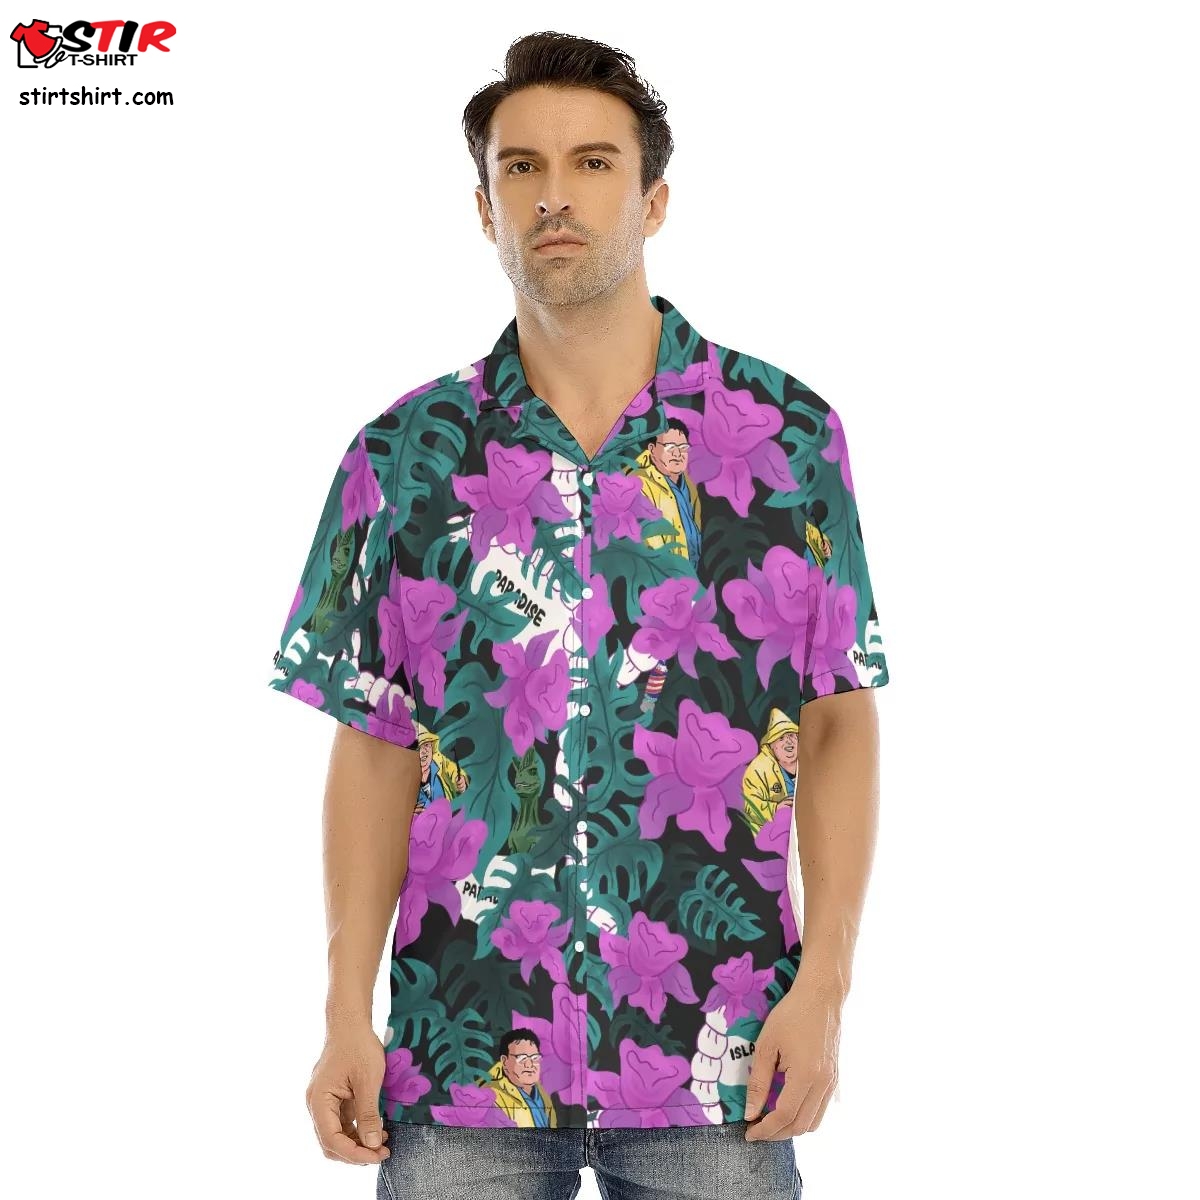 Jurassic Park Dennis Nedry Hawaiian Shirt Jurassic Park - StirTshirt